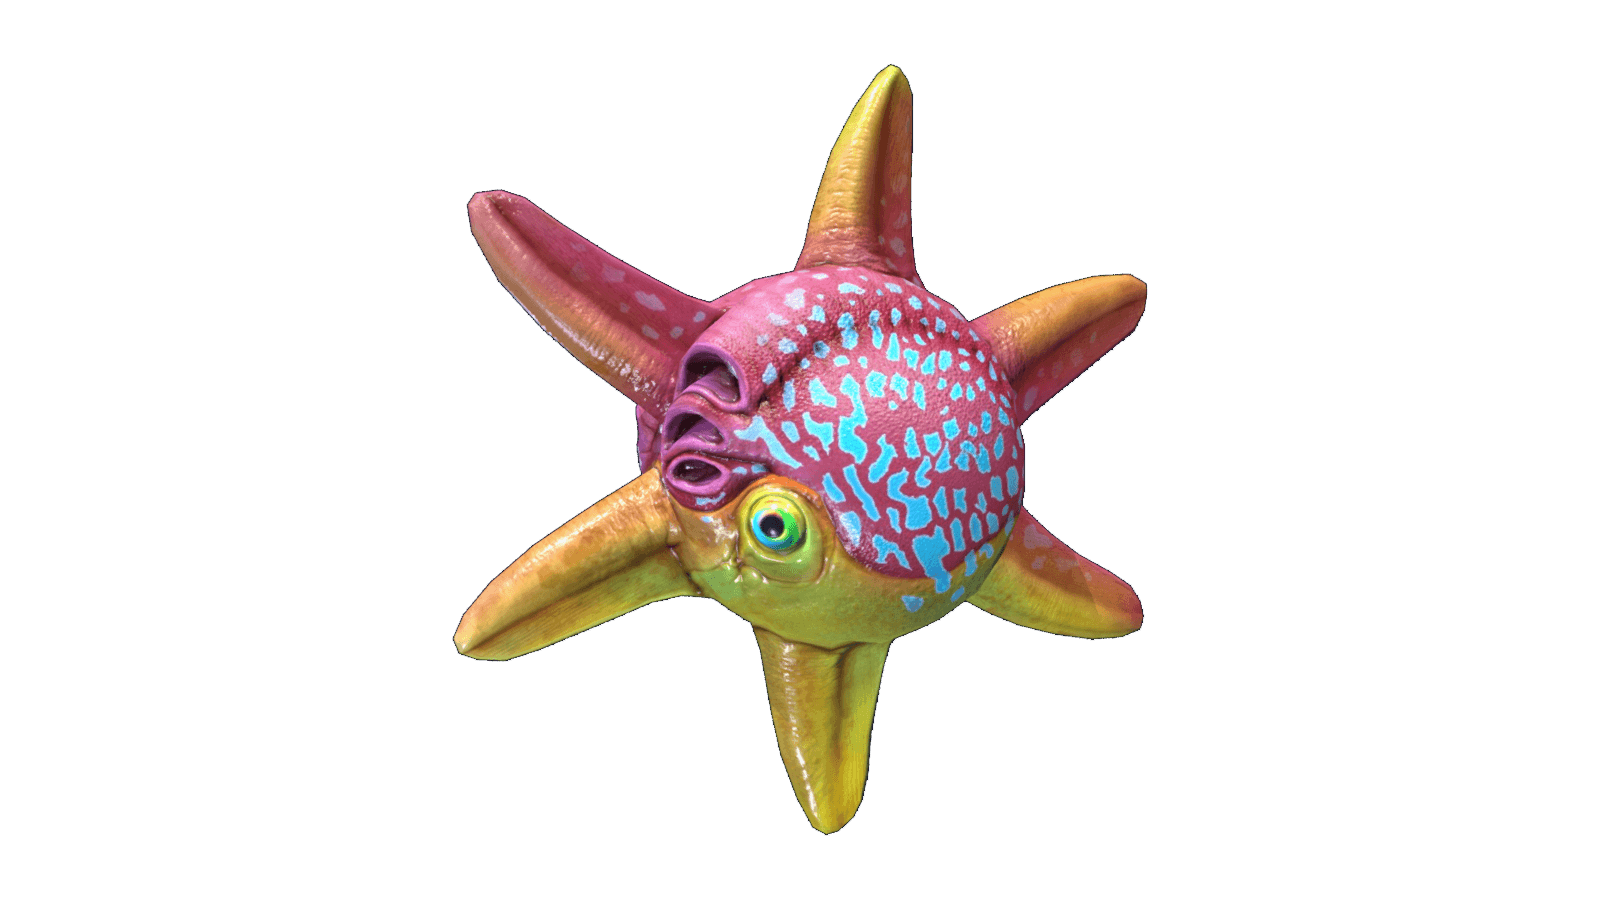 Spinnerfish. Subnautica: Below Zero